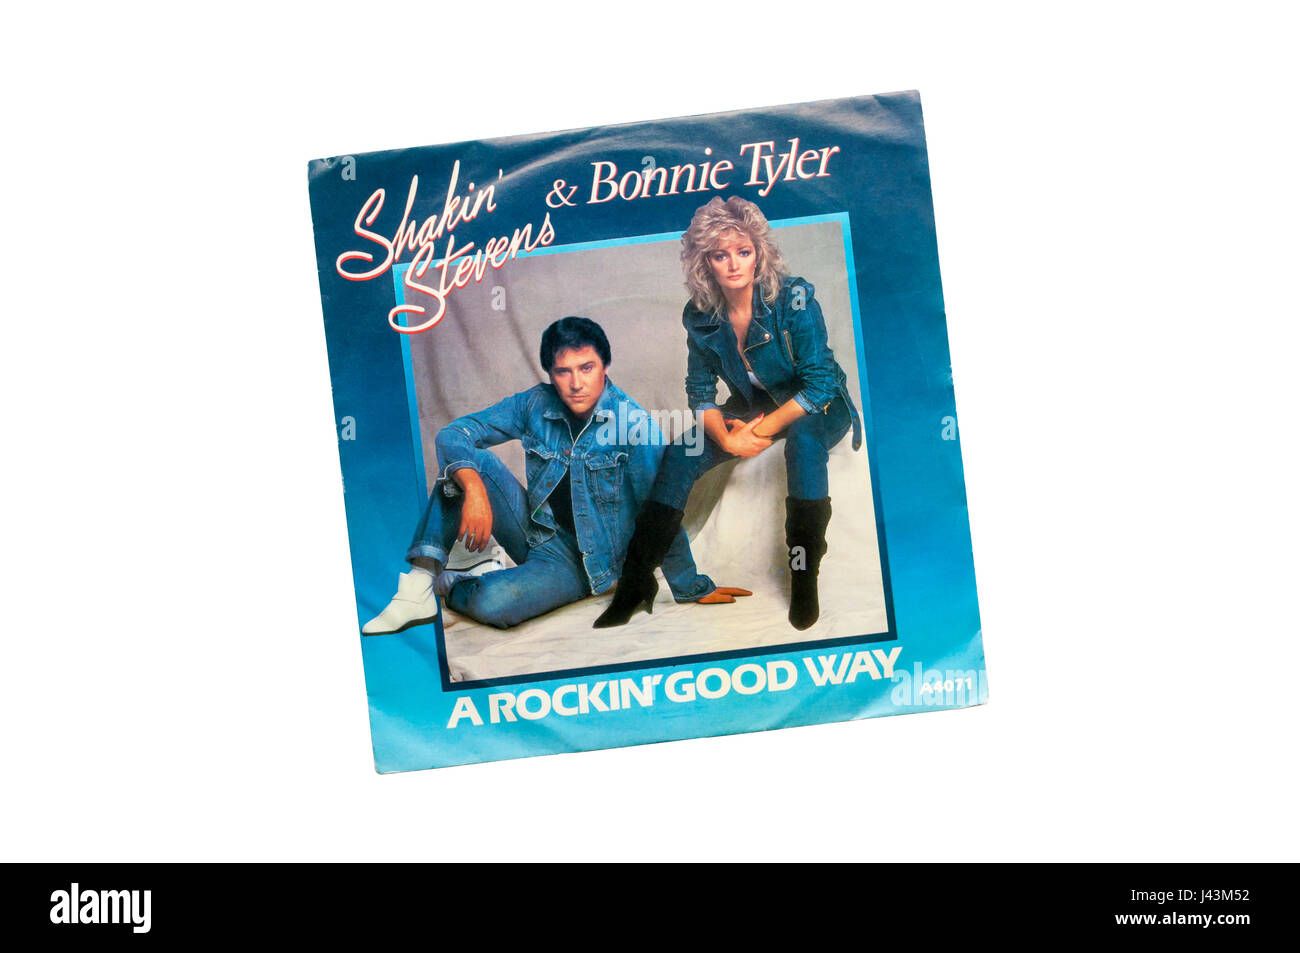 1983 7' single, A Rockin' Good Way by Shakin' Steven & Bonnie Tyler. Stock Photo